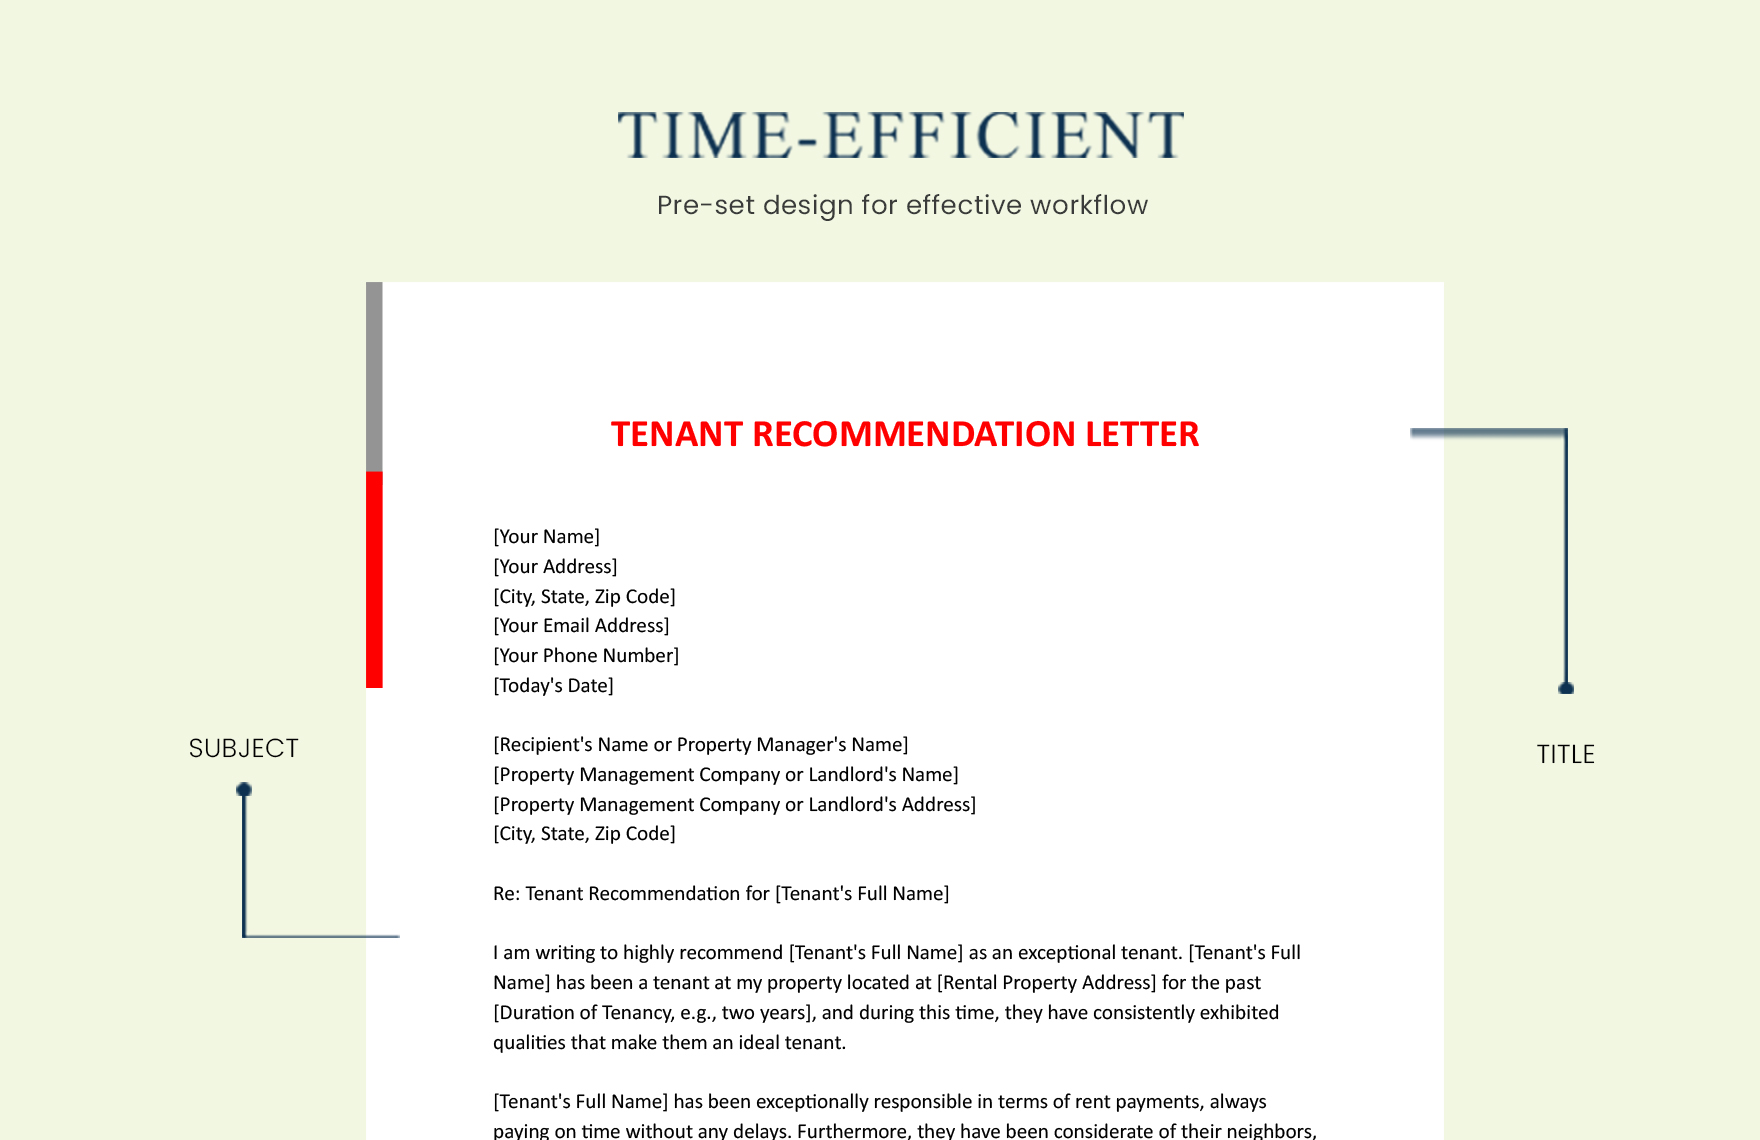 Tenant Recommendation Letter